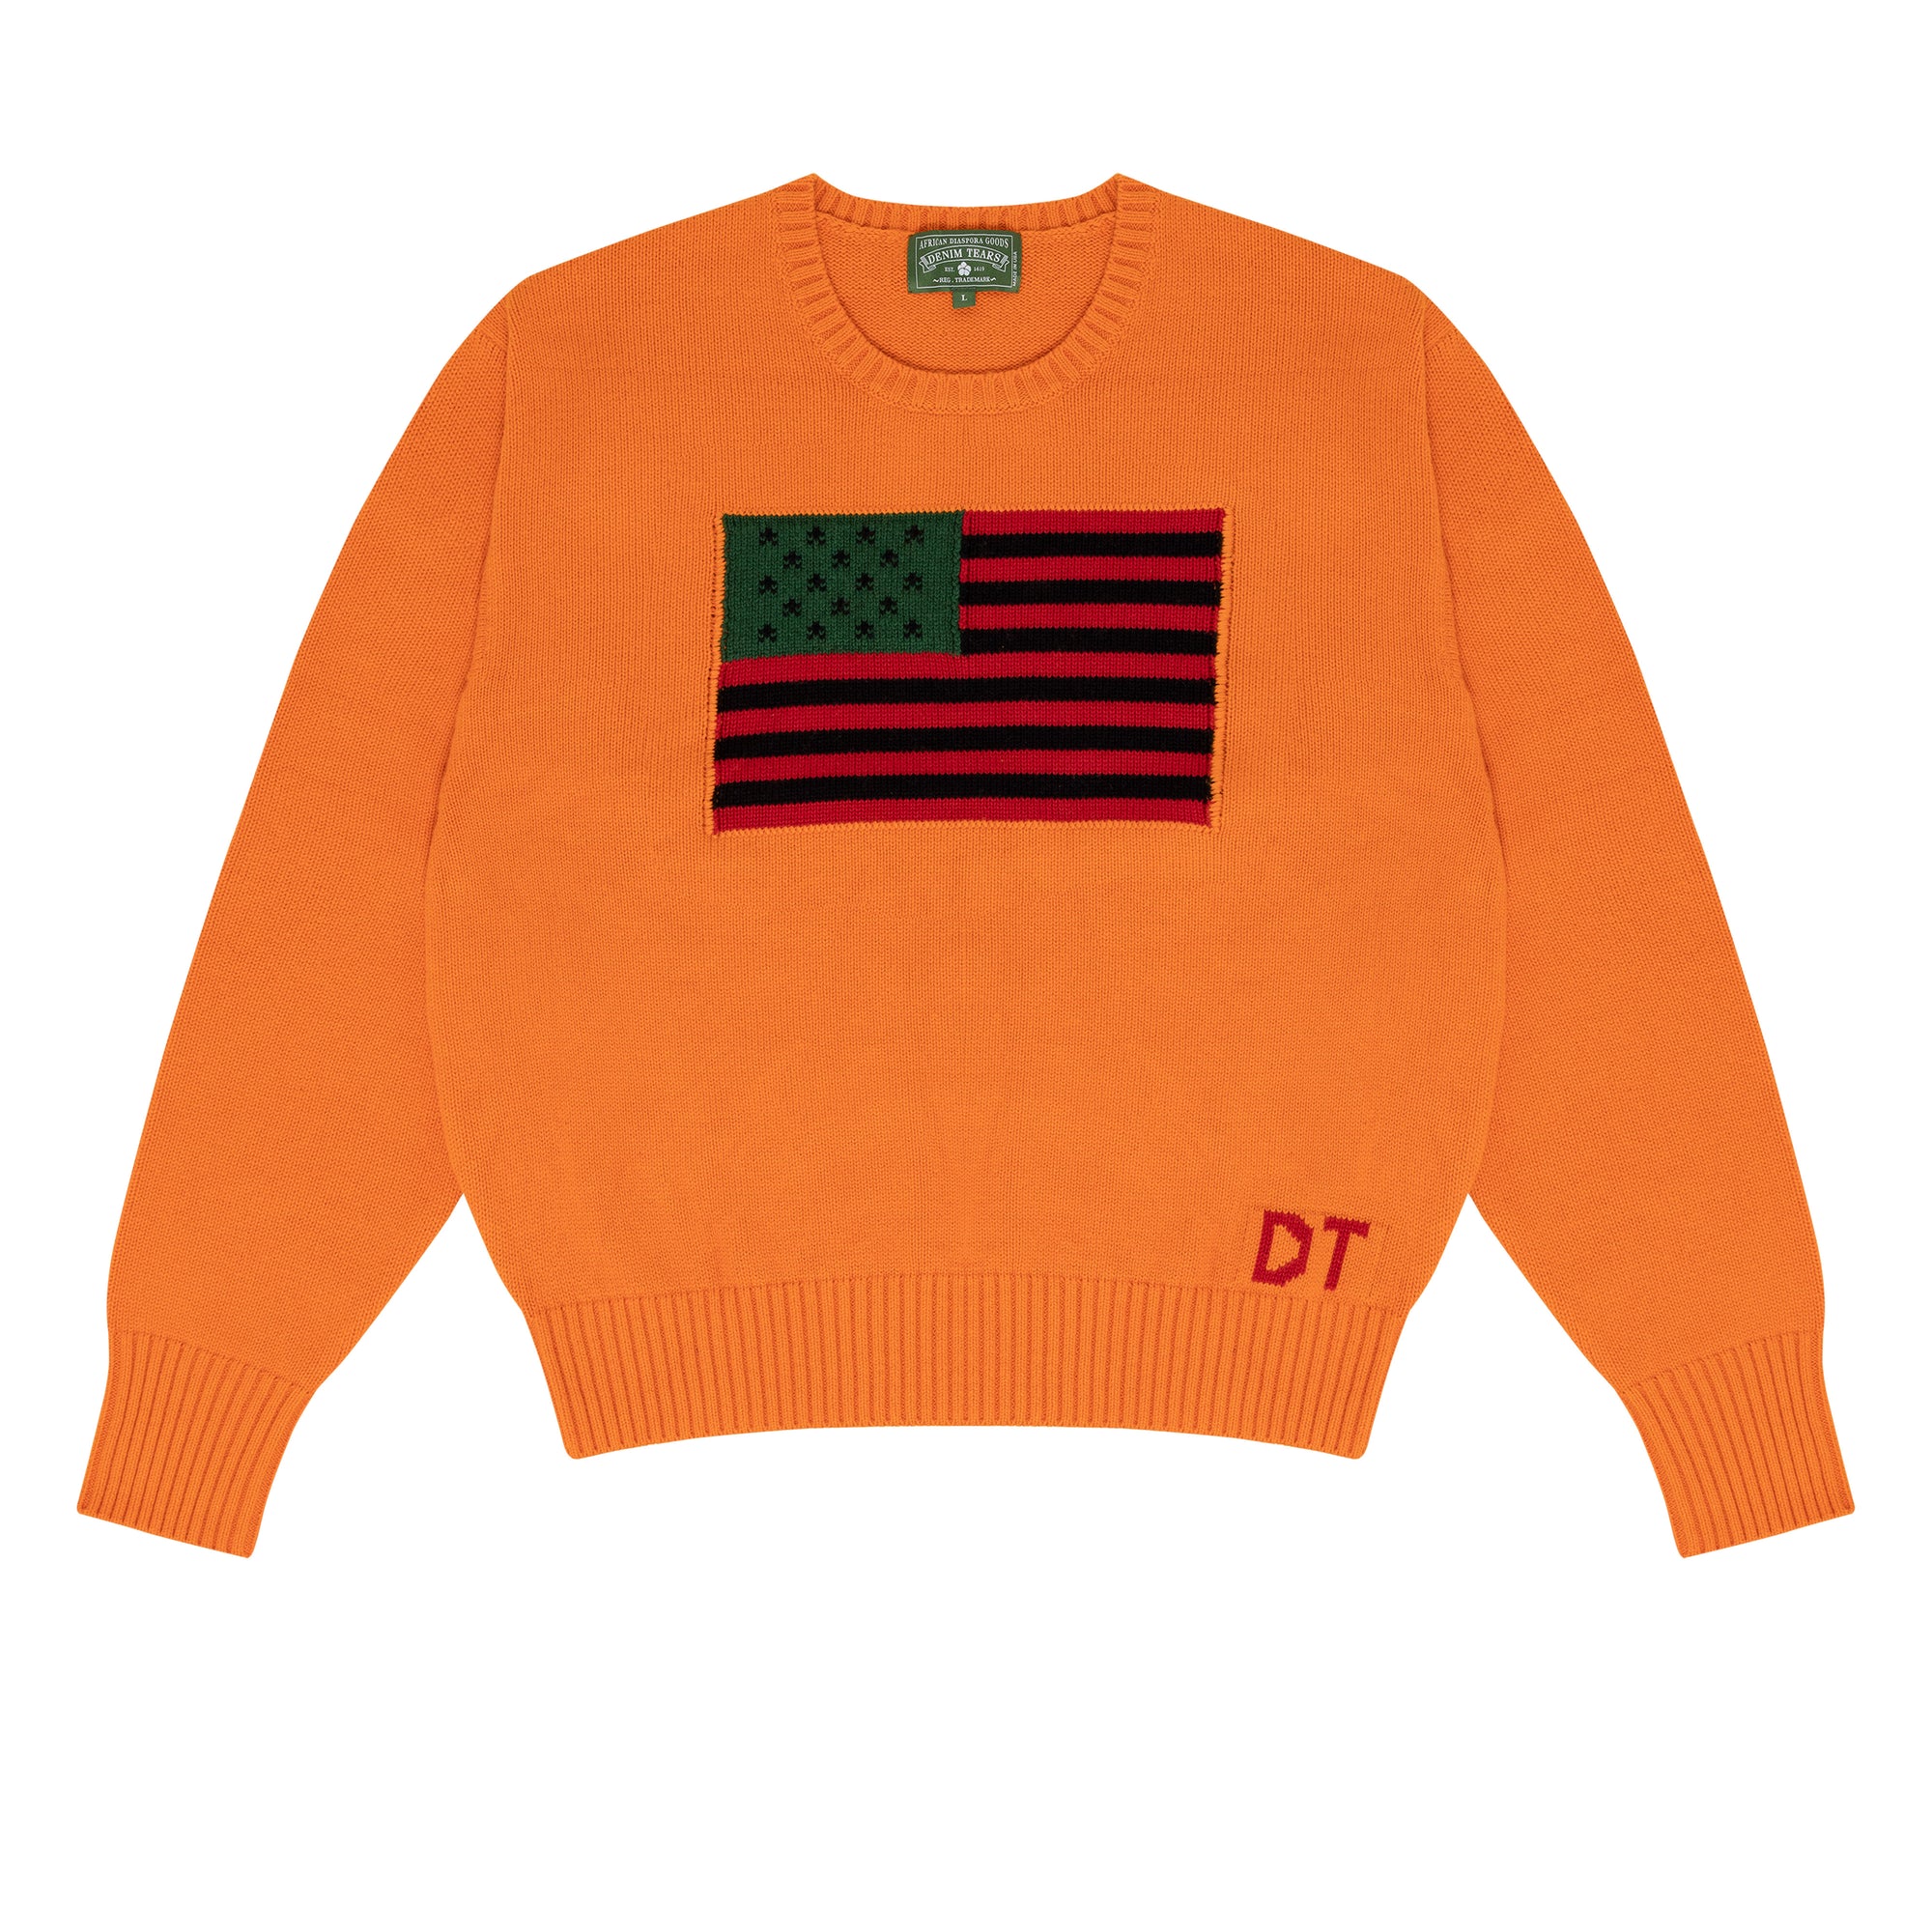 Denim Tears - Tyson Beckford Sweater - (Orange) view 1